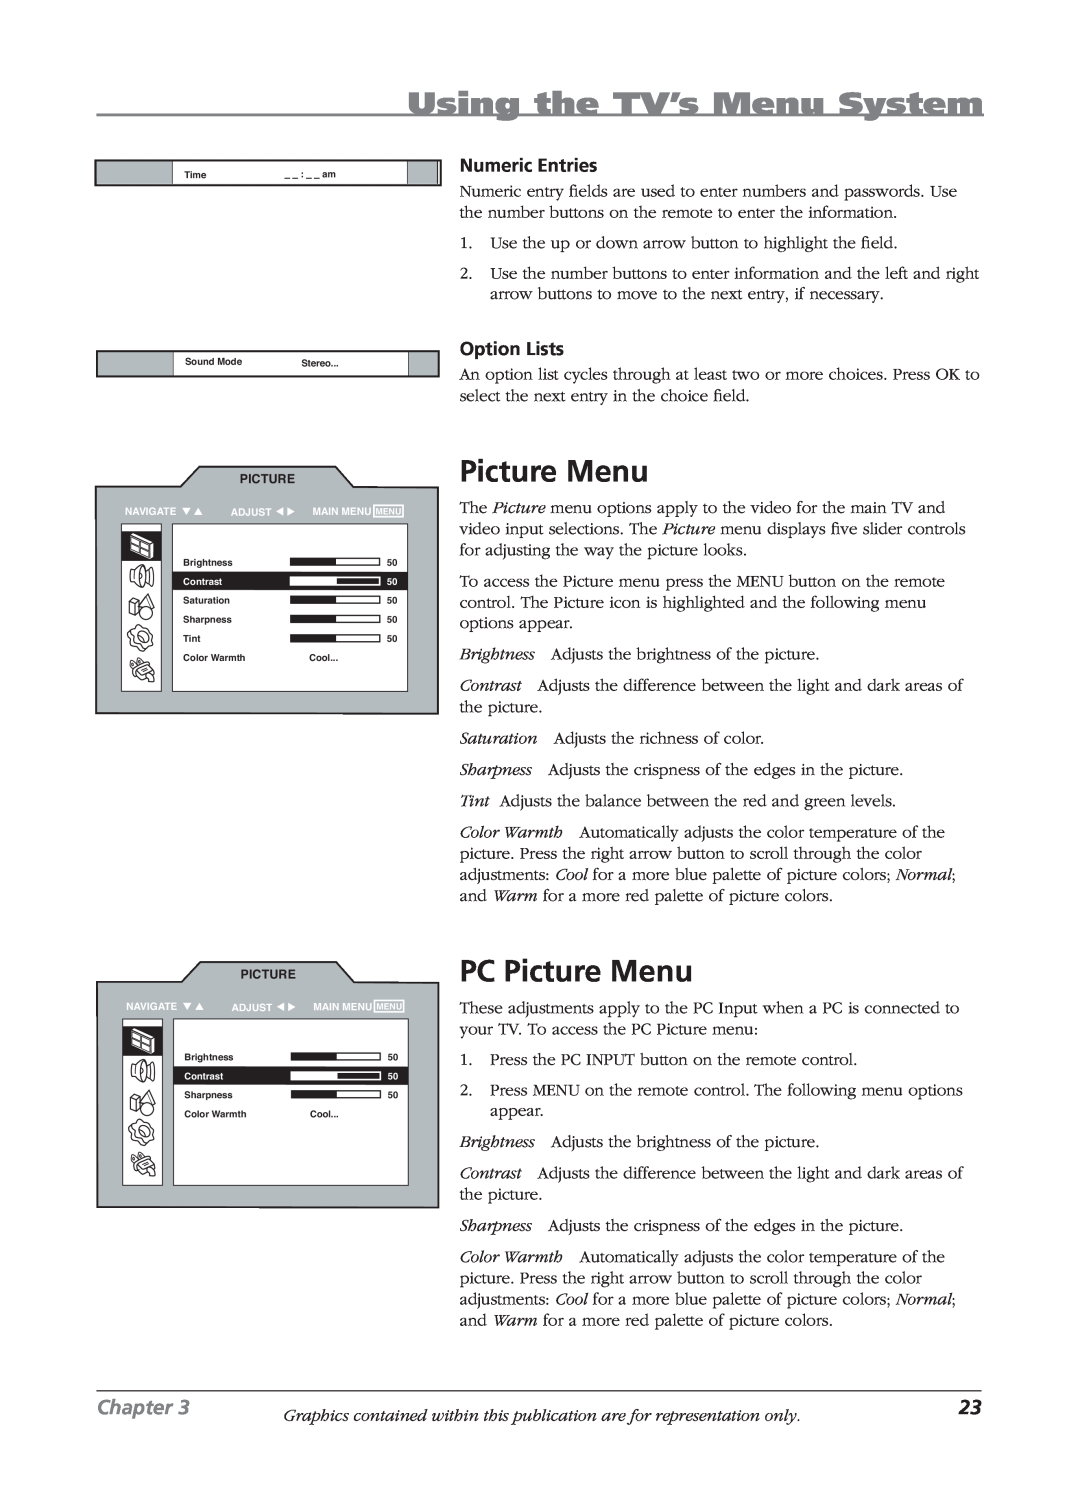 RCA L2010, L23W10, L1510 manual Using the TV’s Menu System, PC Picture Menu, Numeric Entries, Option Lists, Chapter 